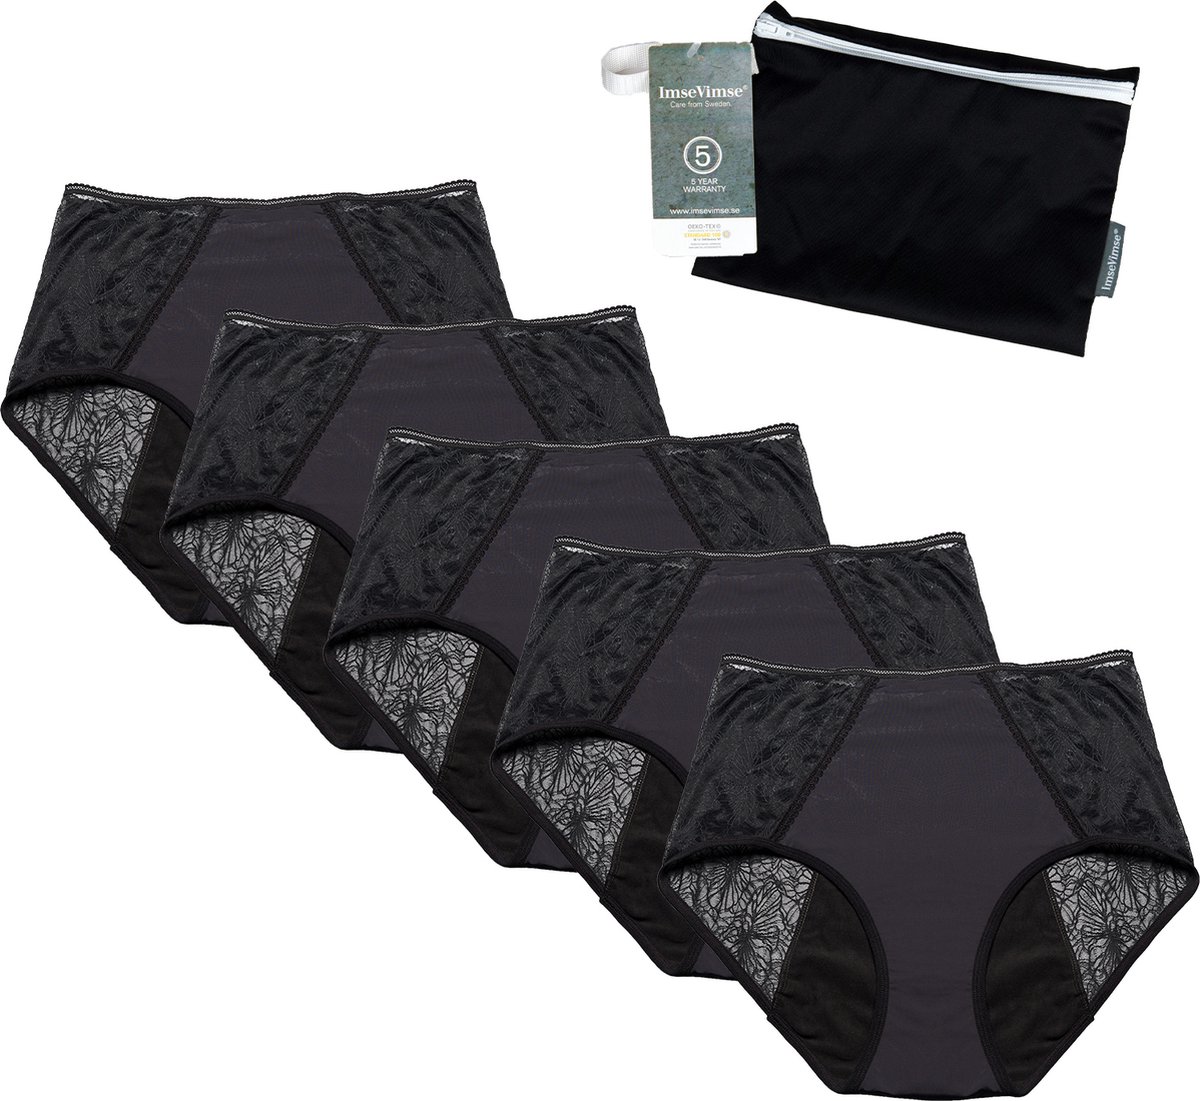 Cheeky Pants Feeling Fearless Set - 5 x Menstruatieondergoed - Maat 40-42 - Extra Absorptie - Wetbag - Zero Waste Product